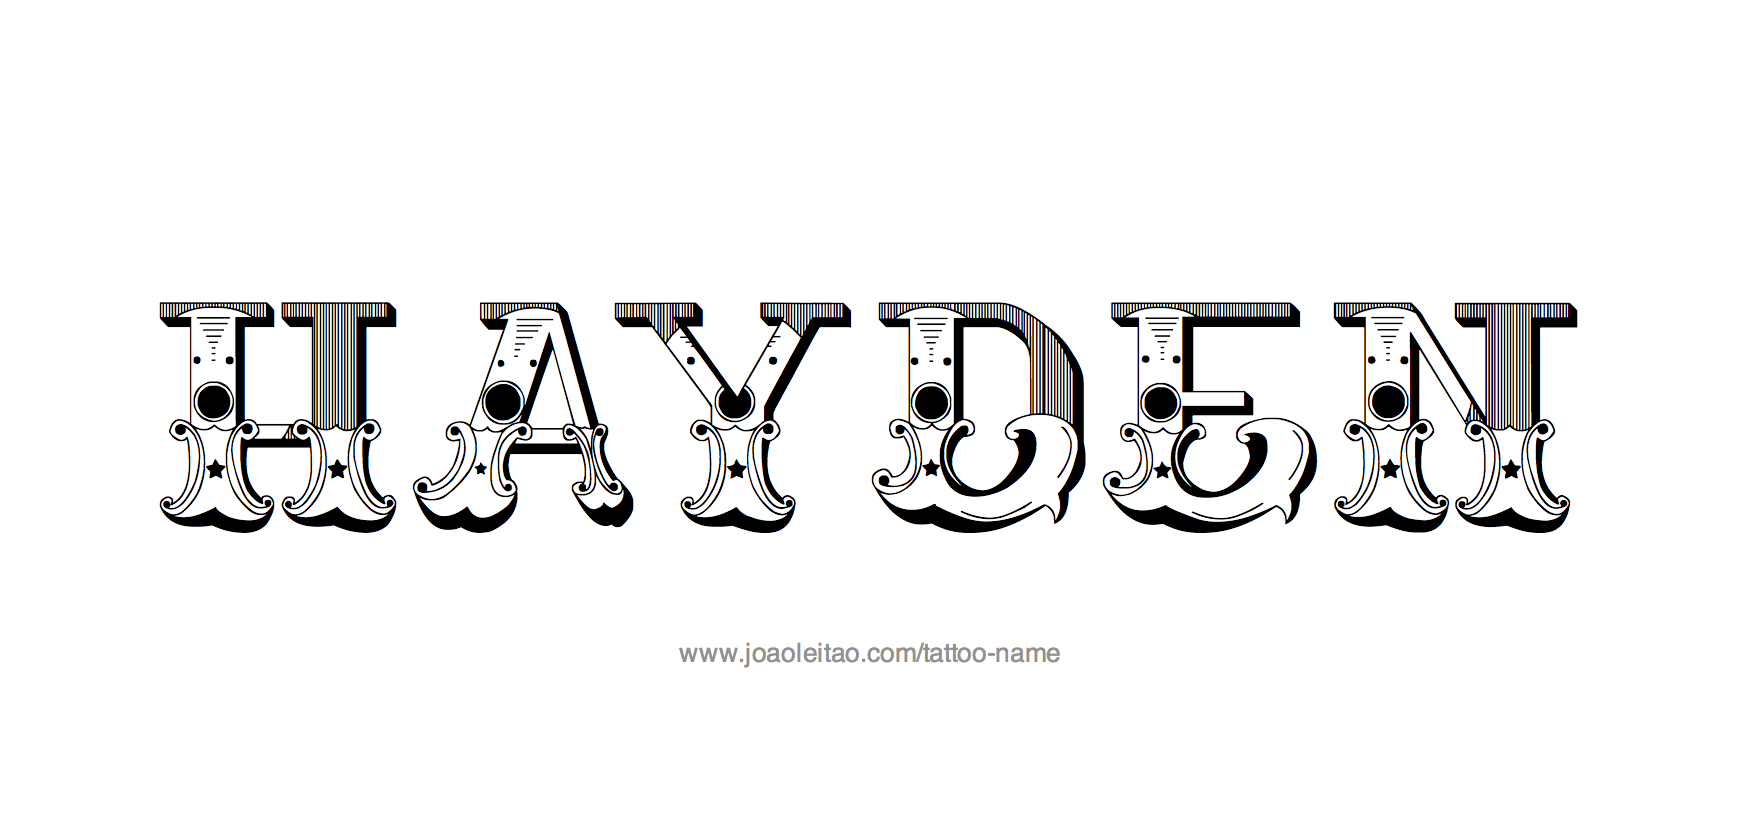 Tattoo Design Name Hayden